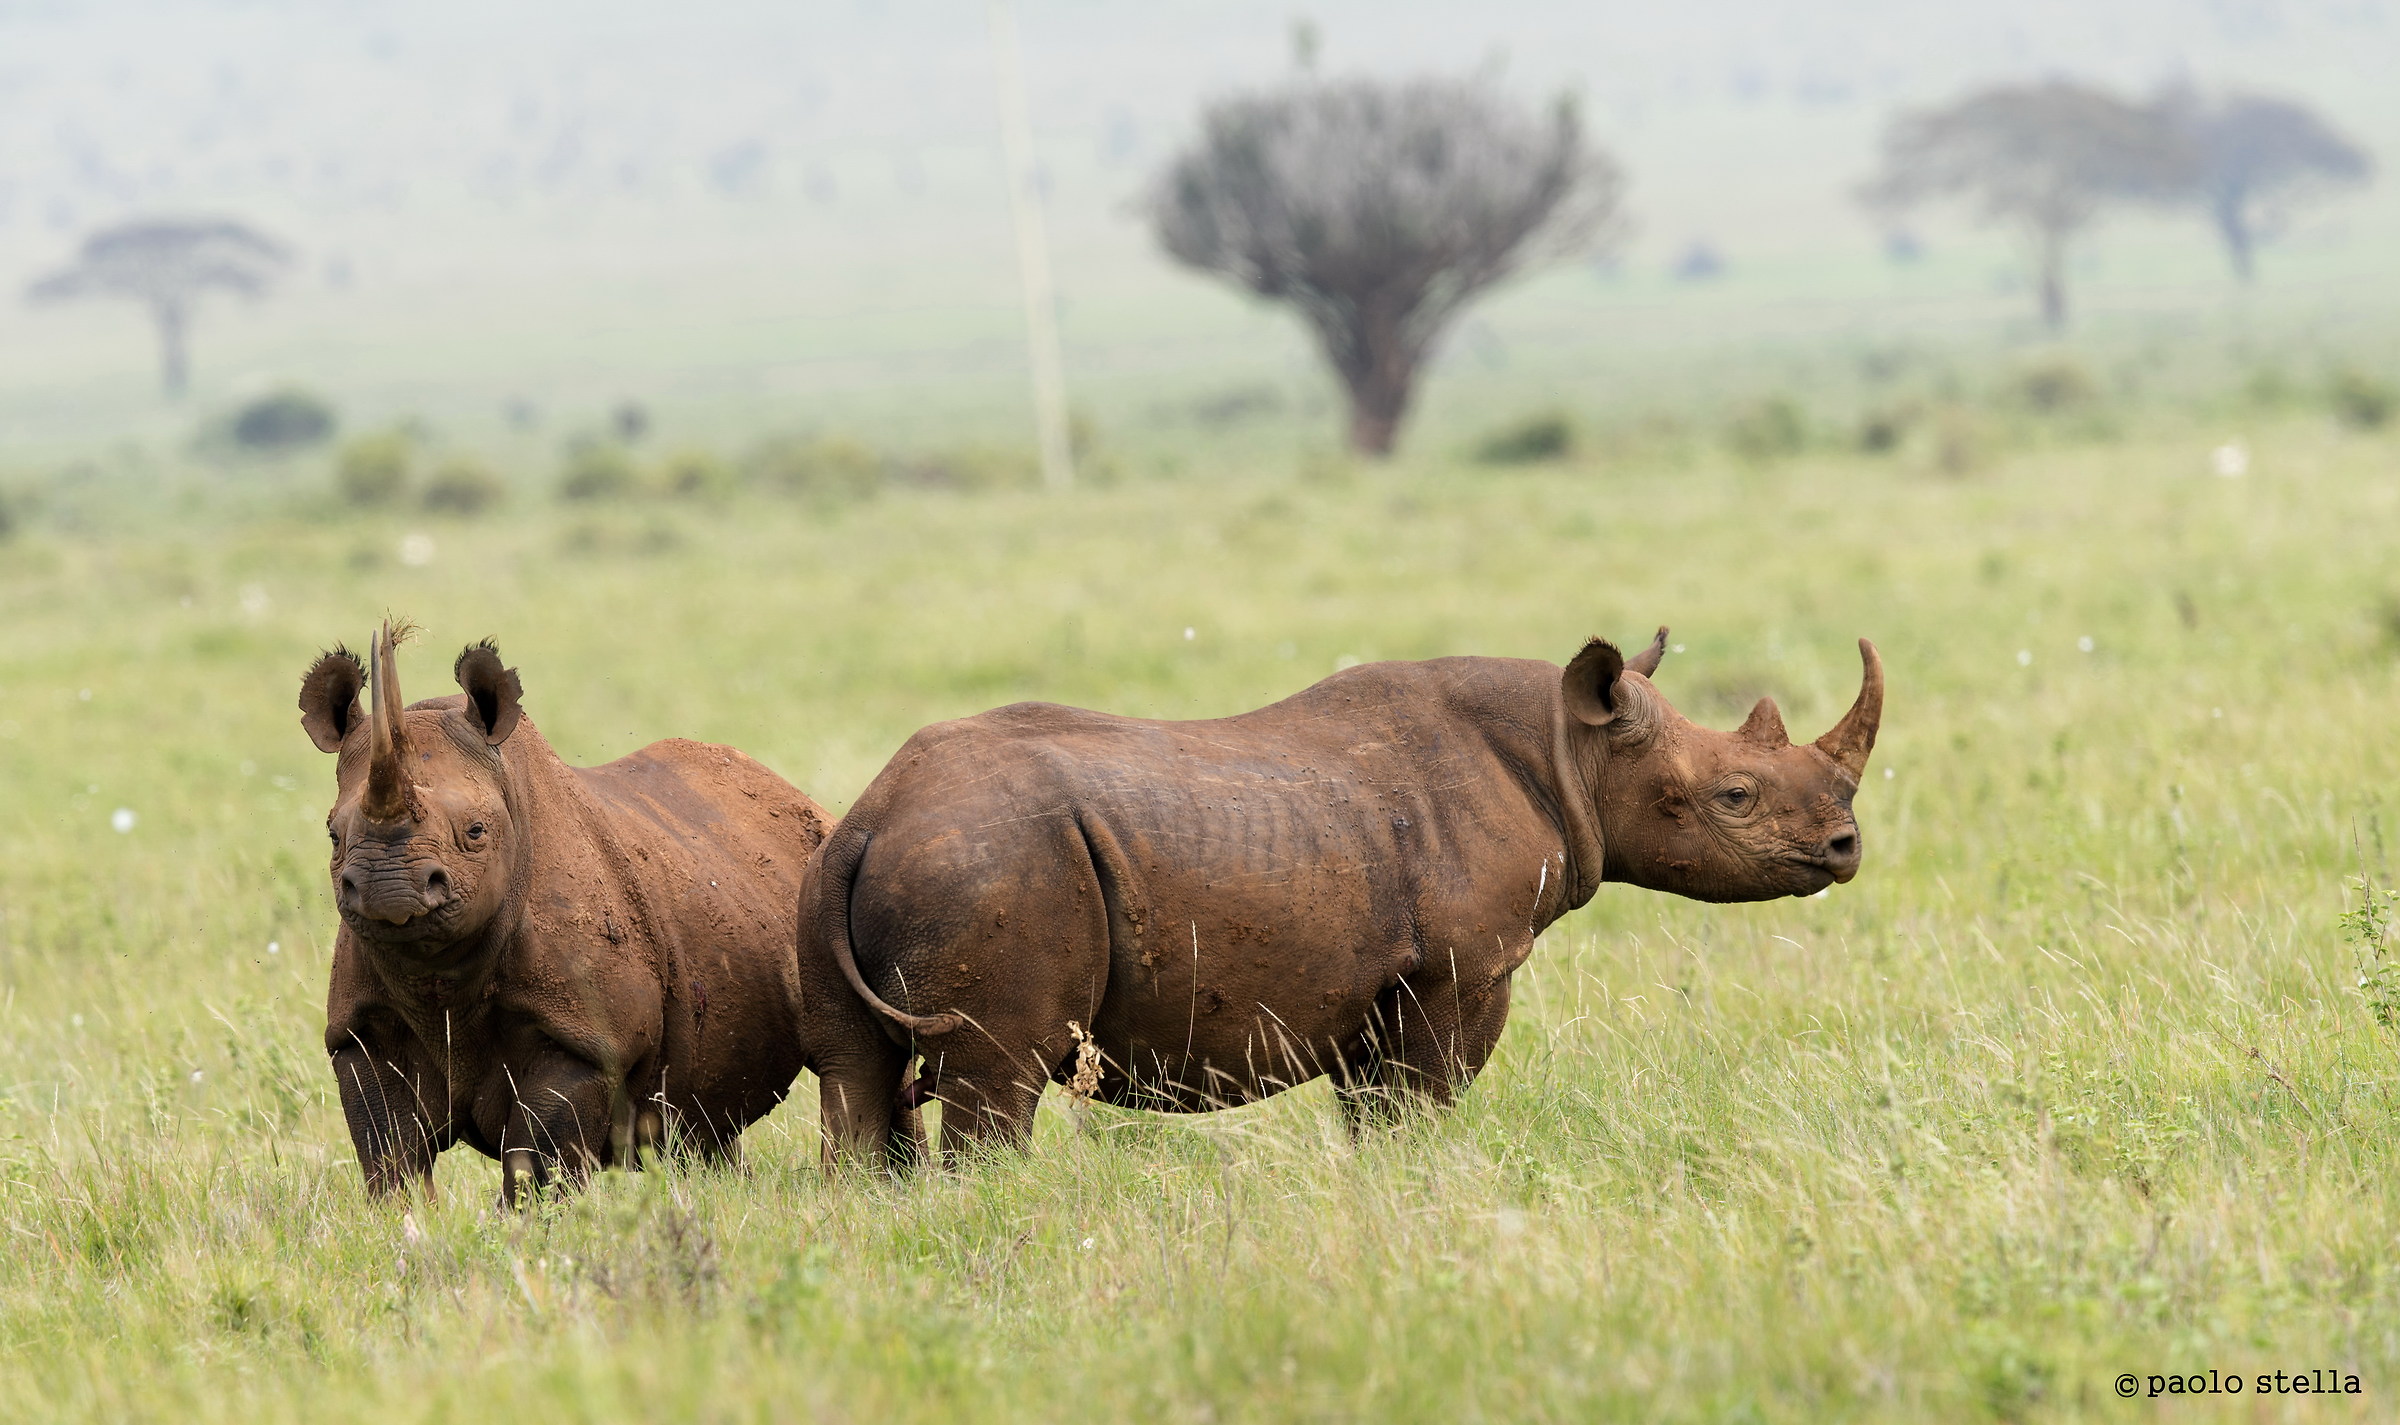 Big ones - Black Rhinos...